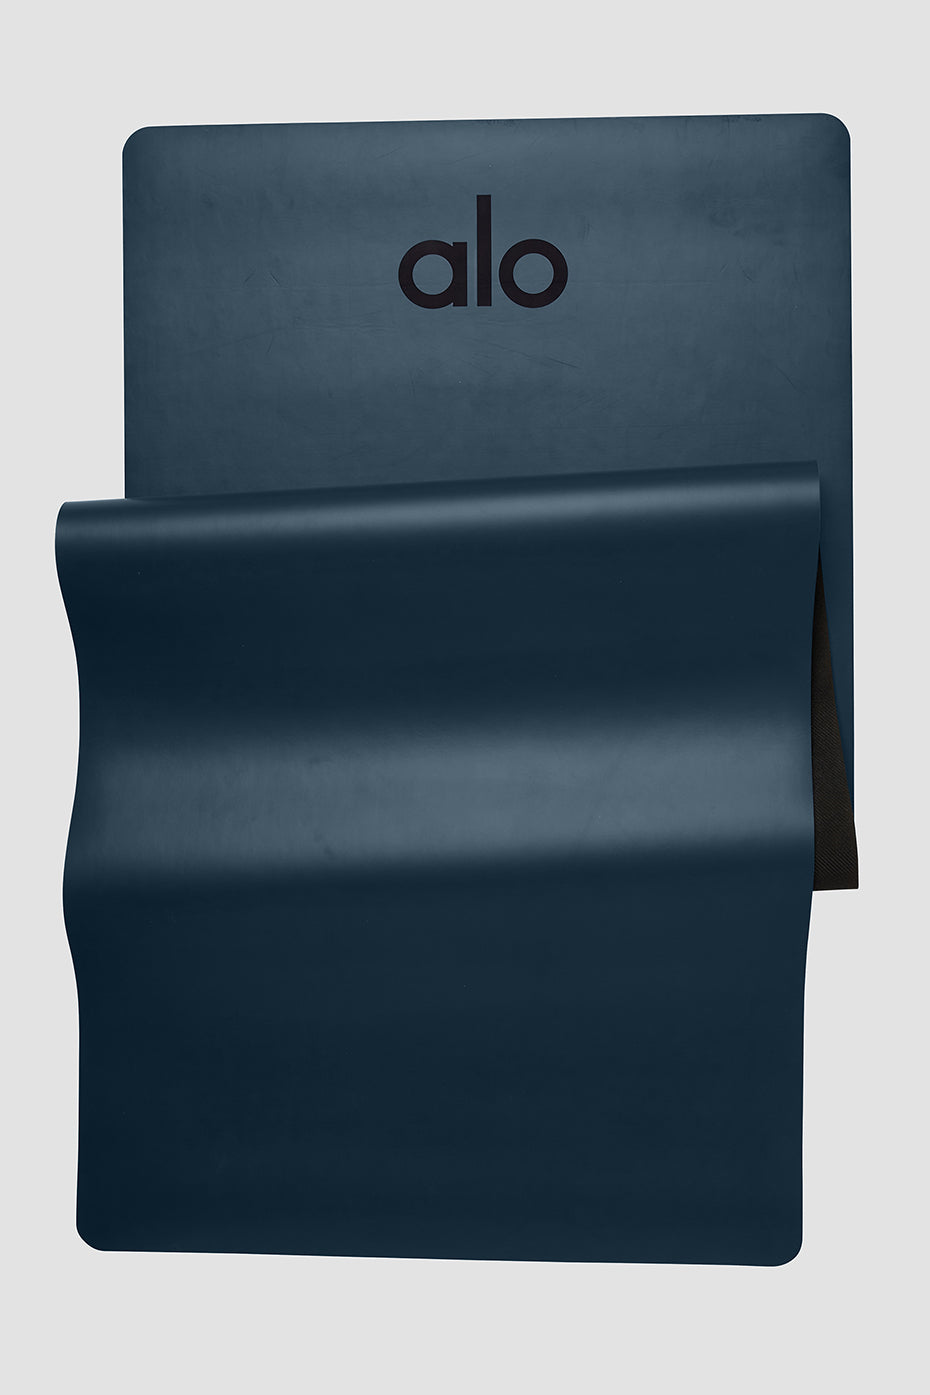 Warrior Mat + Alo Yoga Strap (Blue Tie-Dye)'s Code & Price - RblxTrade